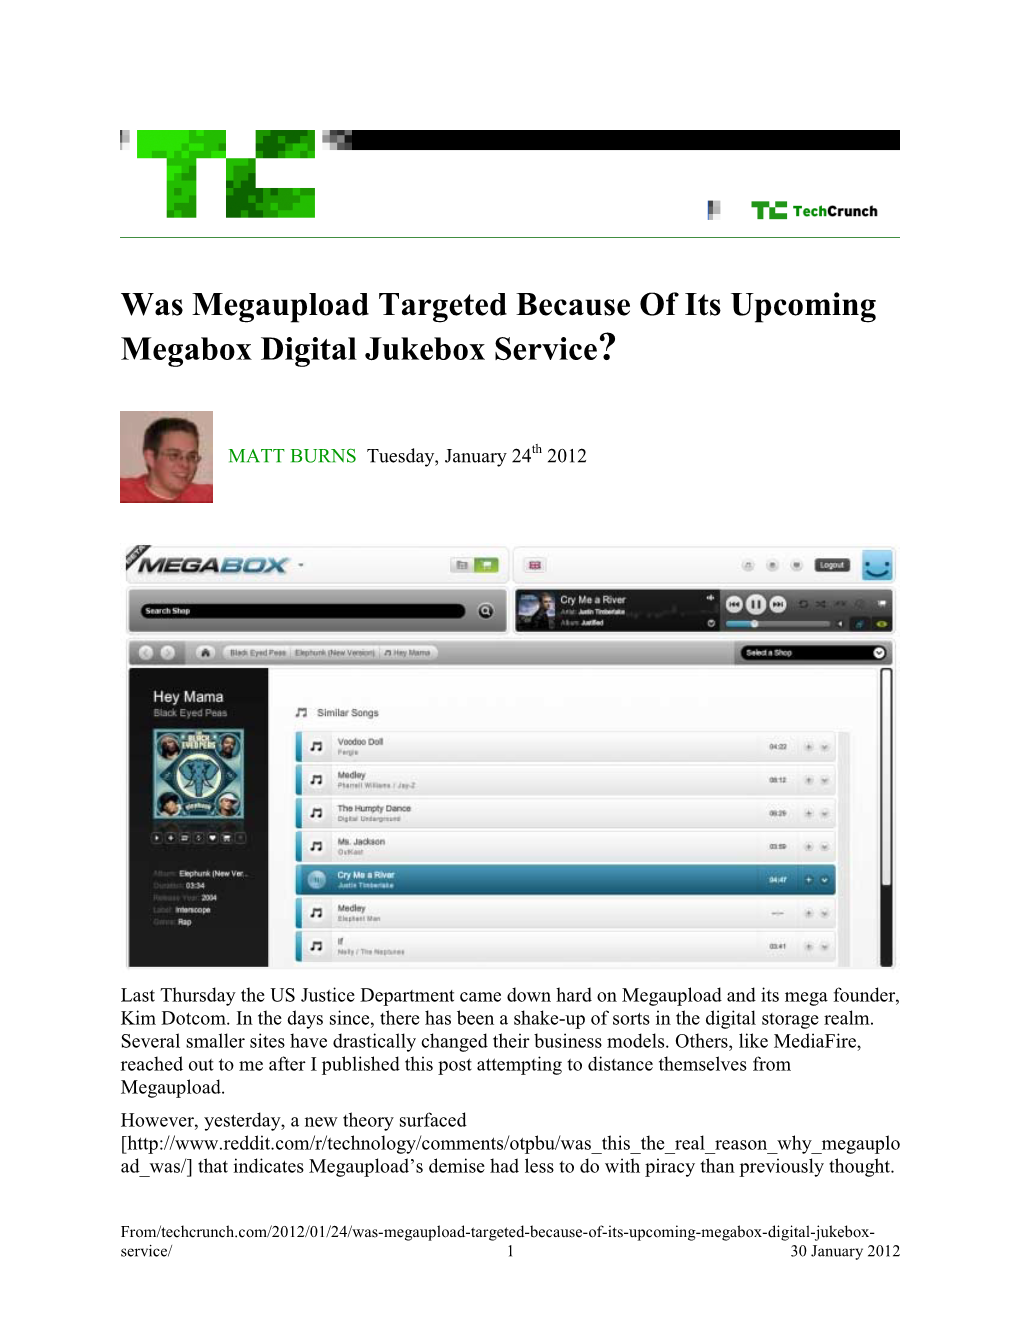 Was Megaupload Targeted Because of Its Upcoming Megabox Digital Jukebox Service?